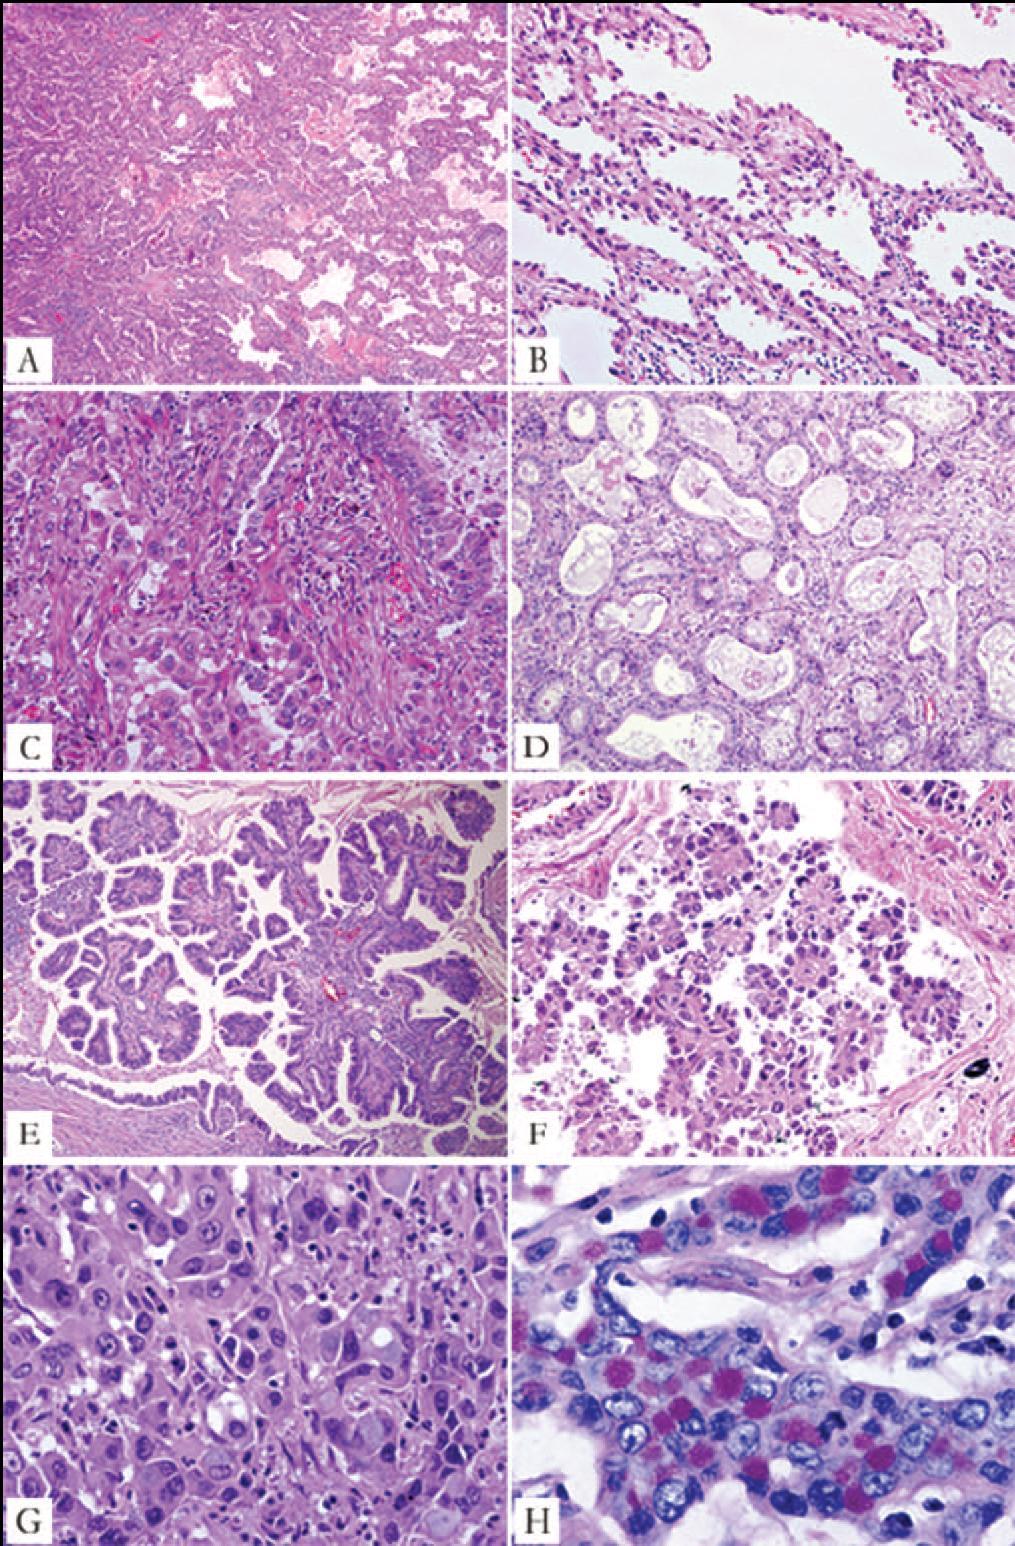 Lepidic predominant pattern Acinar adenocarcinoma Papillary adenocarcinoma Micropapillary